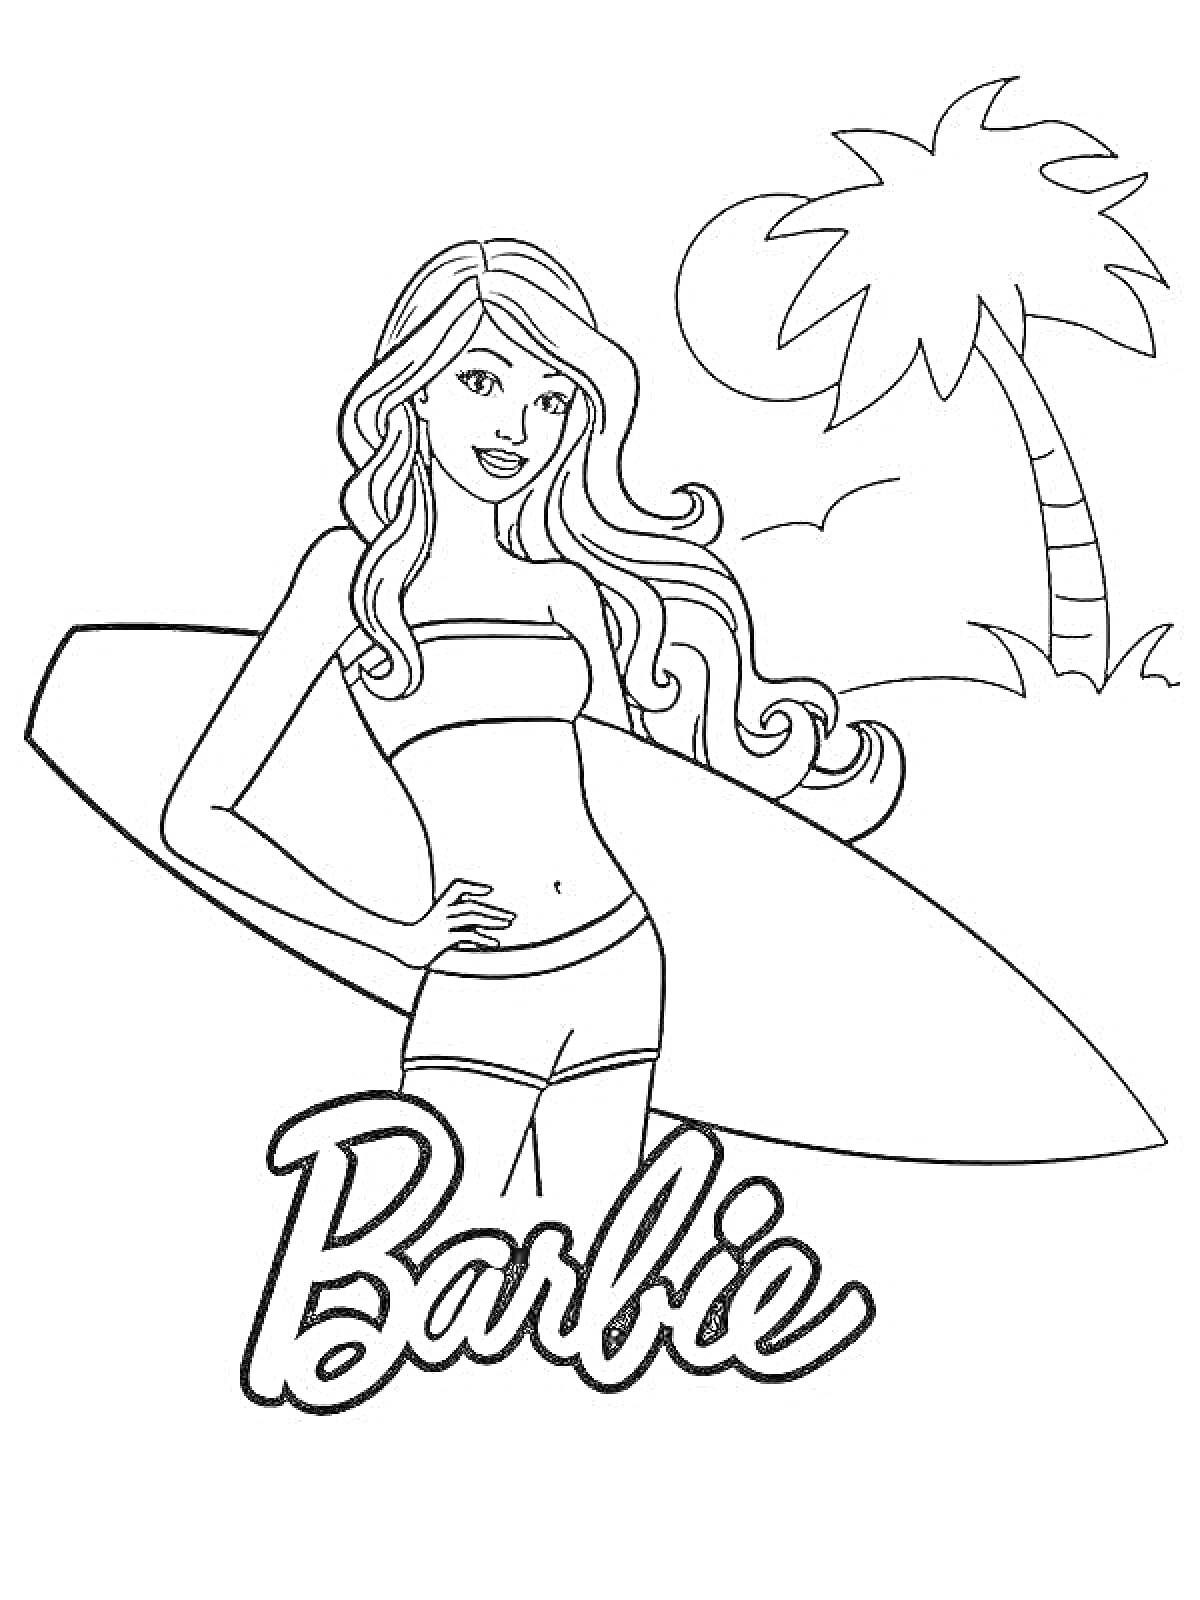 Раскраска Барби с доской для серфинга на пляже, пальма, солнце и облака